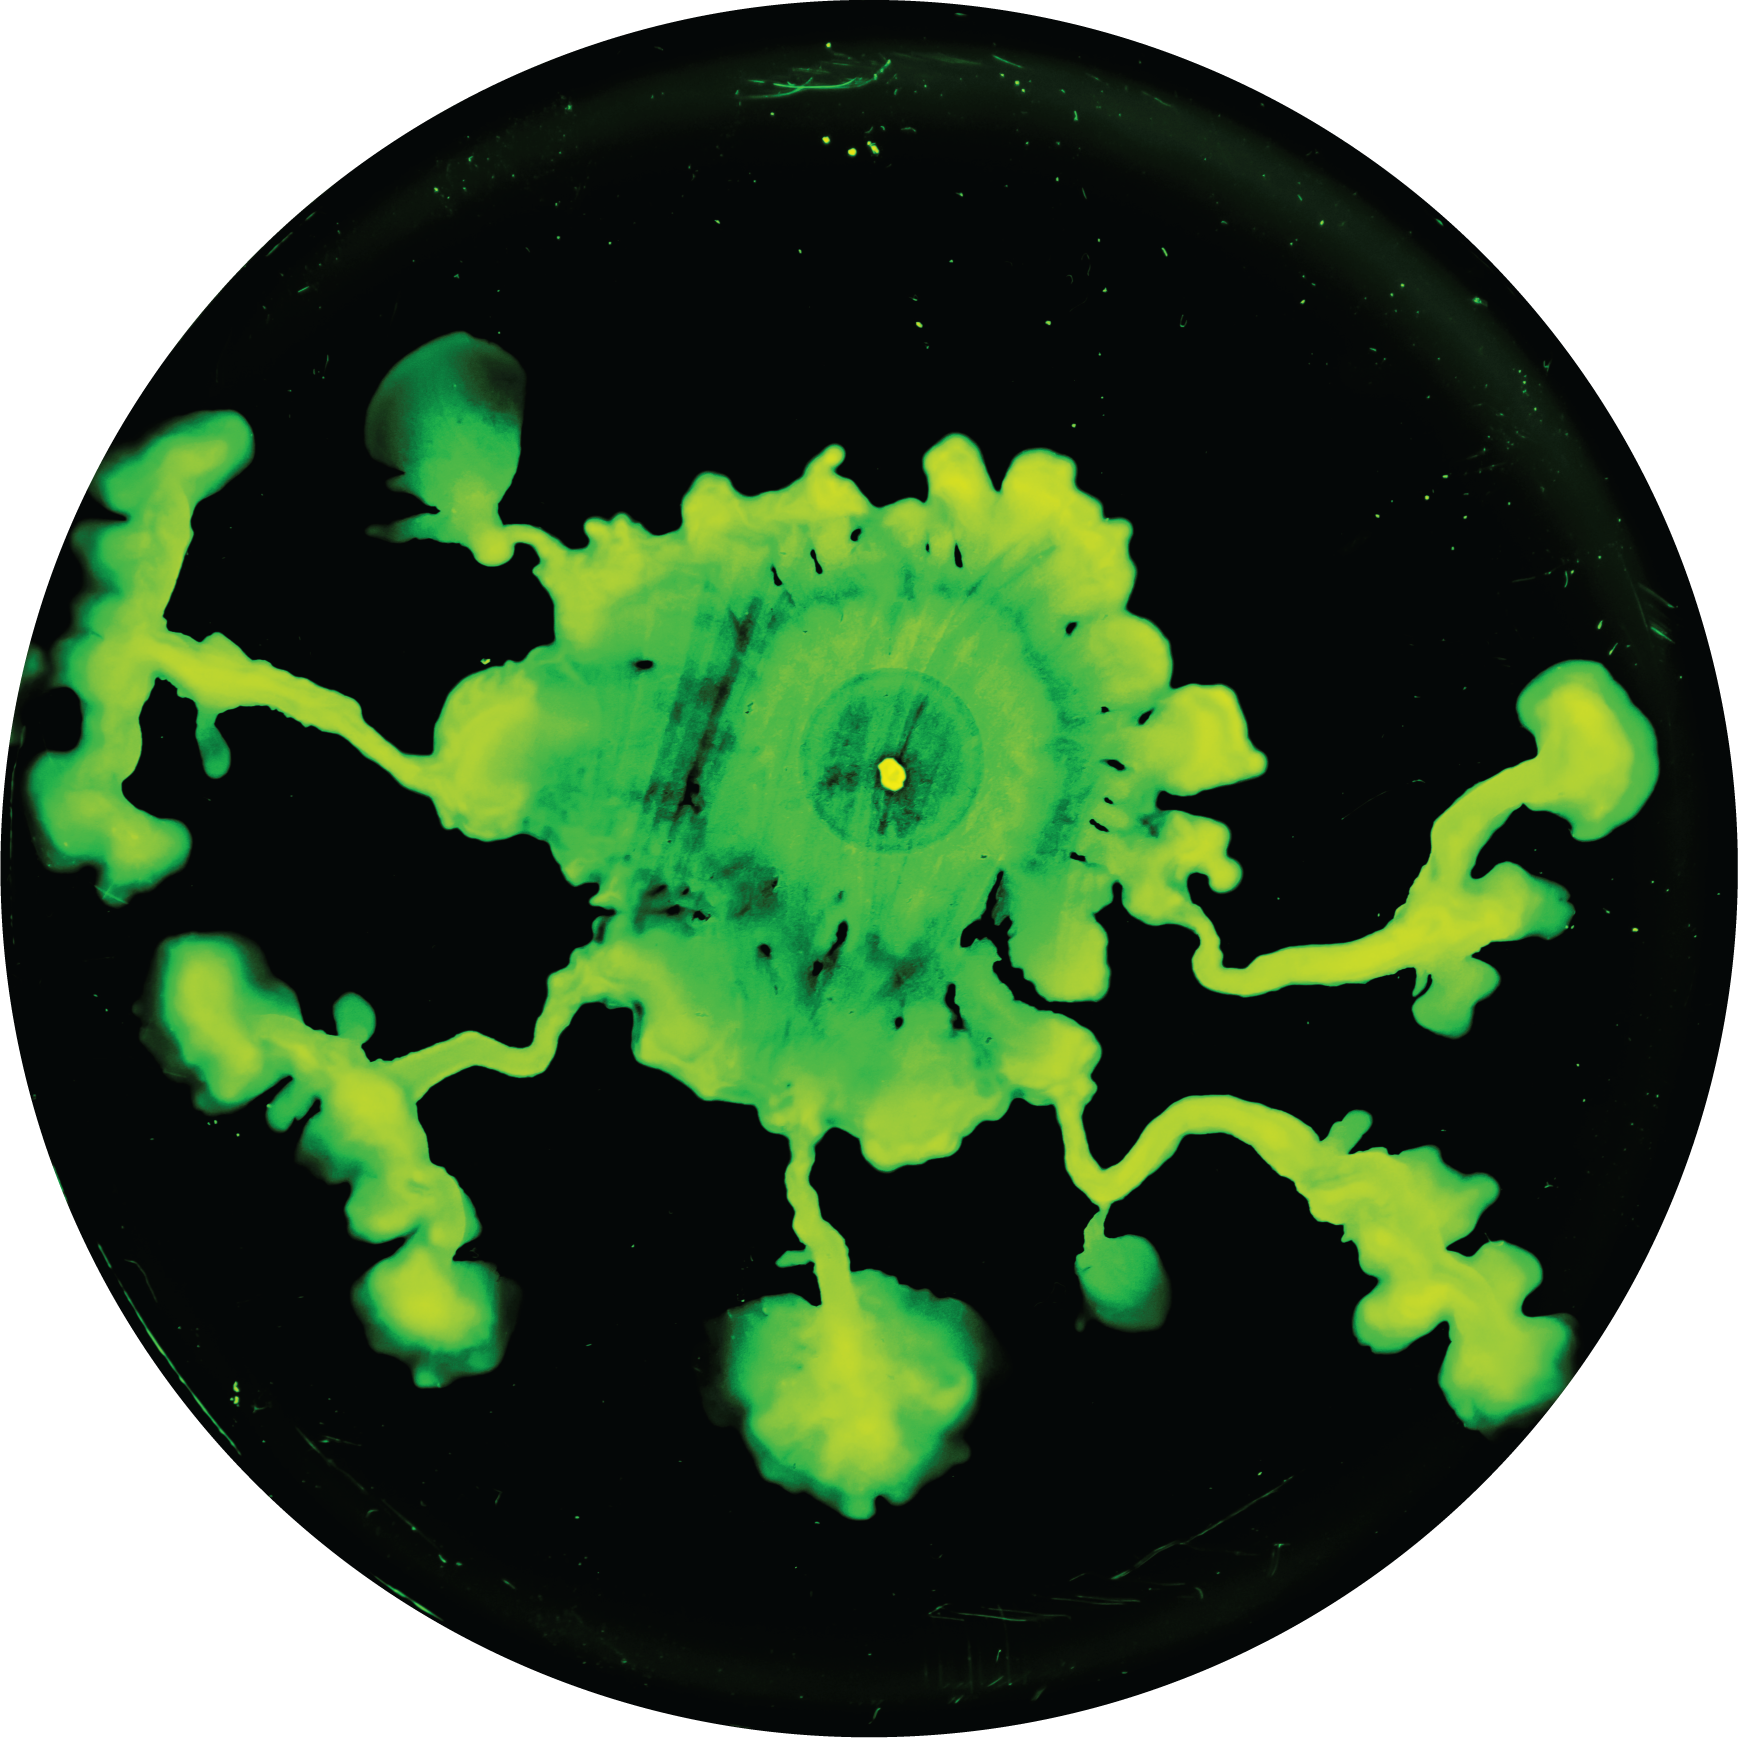 Swarming pattern of a mutant E. coli